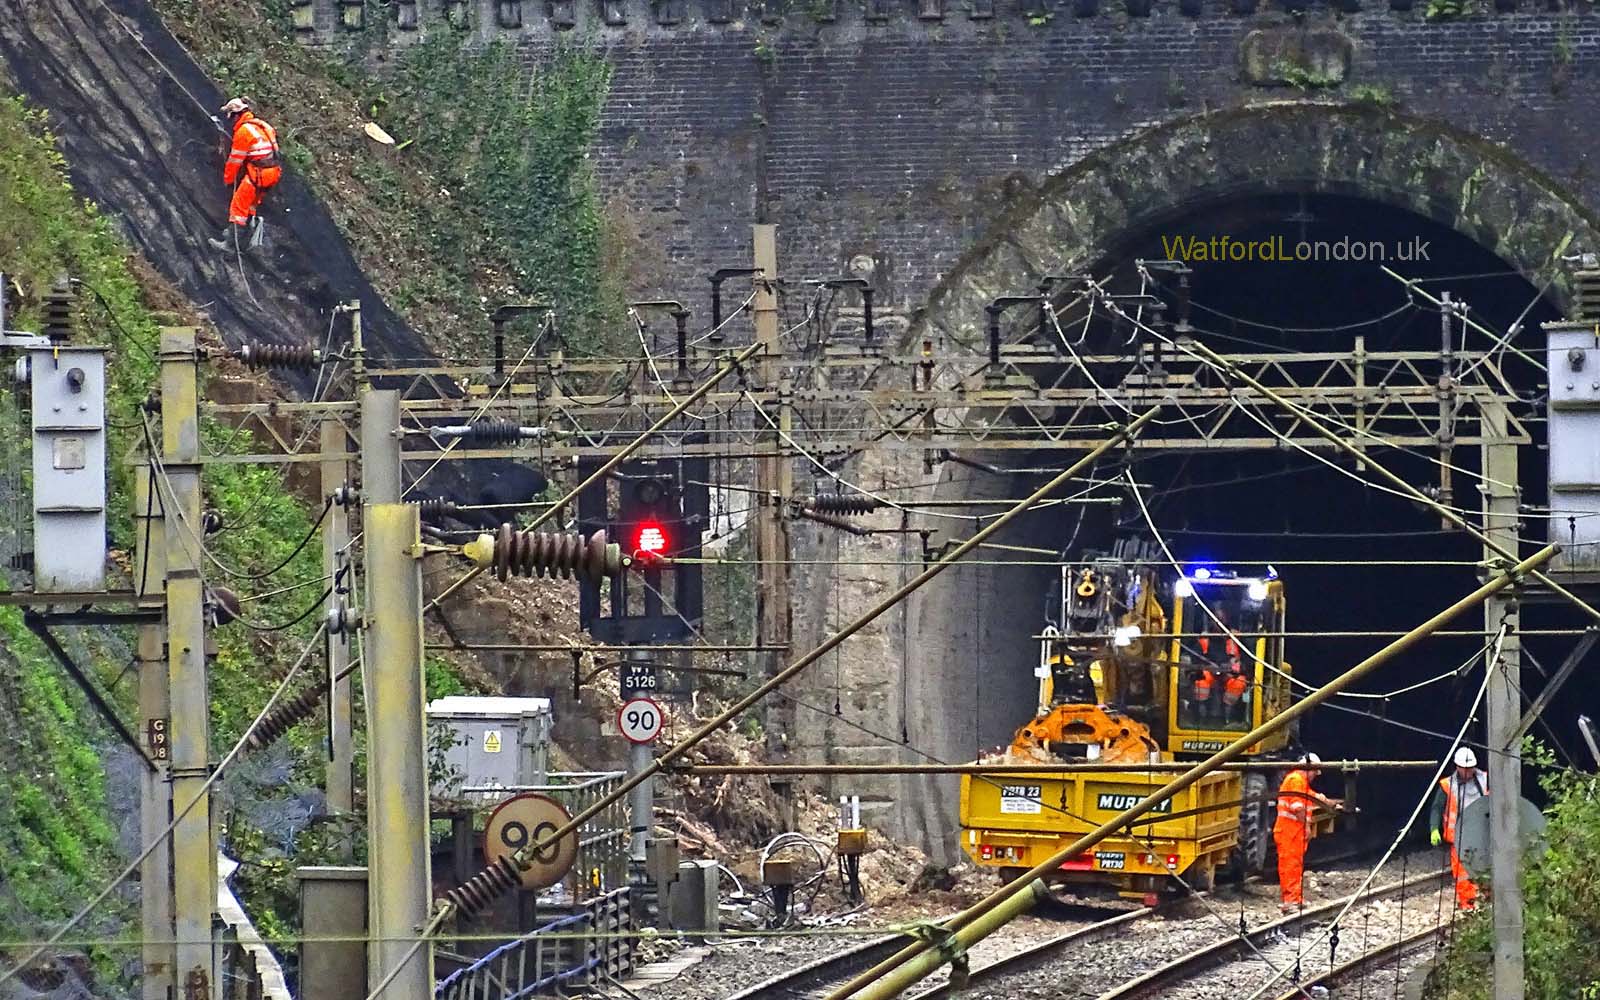 Watford Junction derailment: Crashed train travelling at 80mph before braking, investigators find